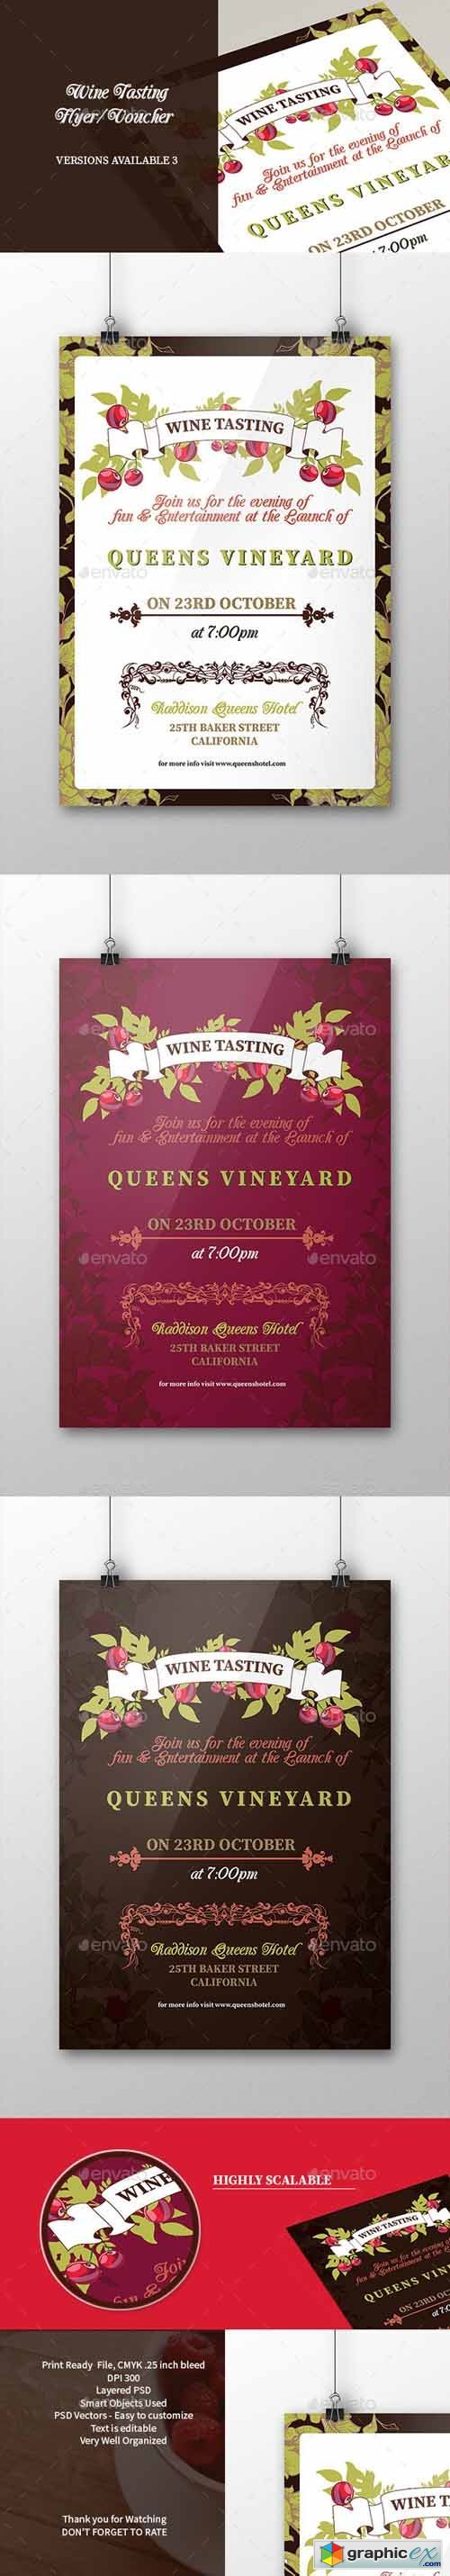 Wine Tasting Flyer/Poster